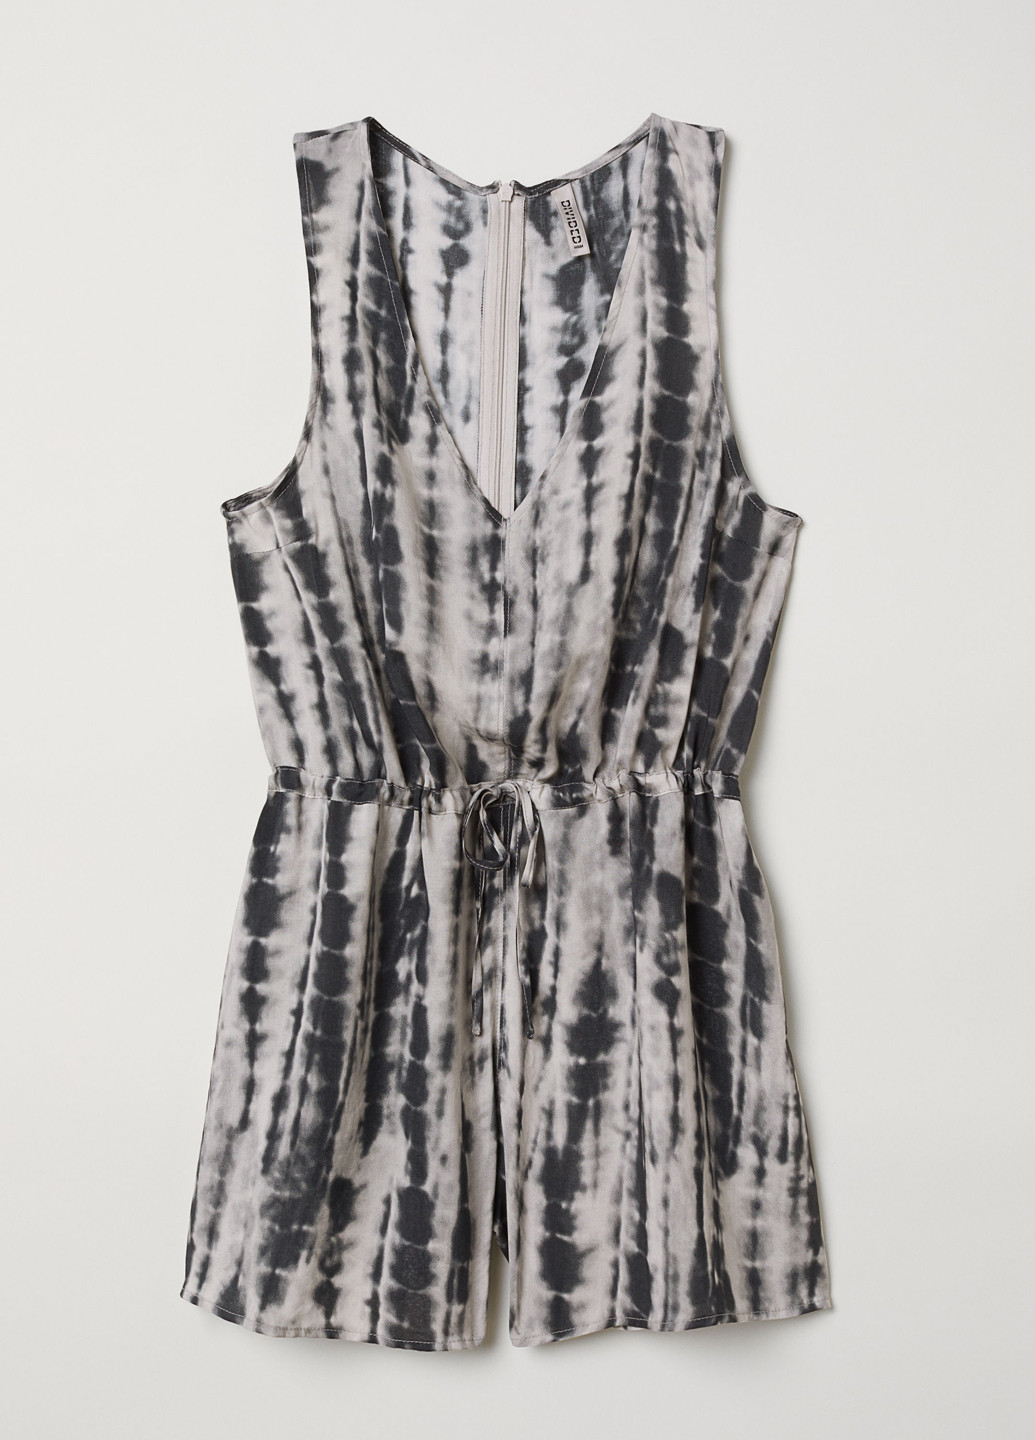 Комбинезон H&M комбинезон-шорты абстрактный серый кэжуал